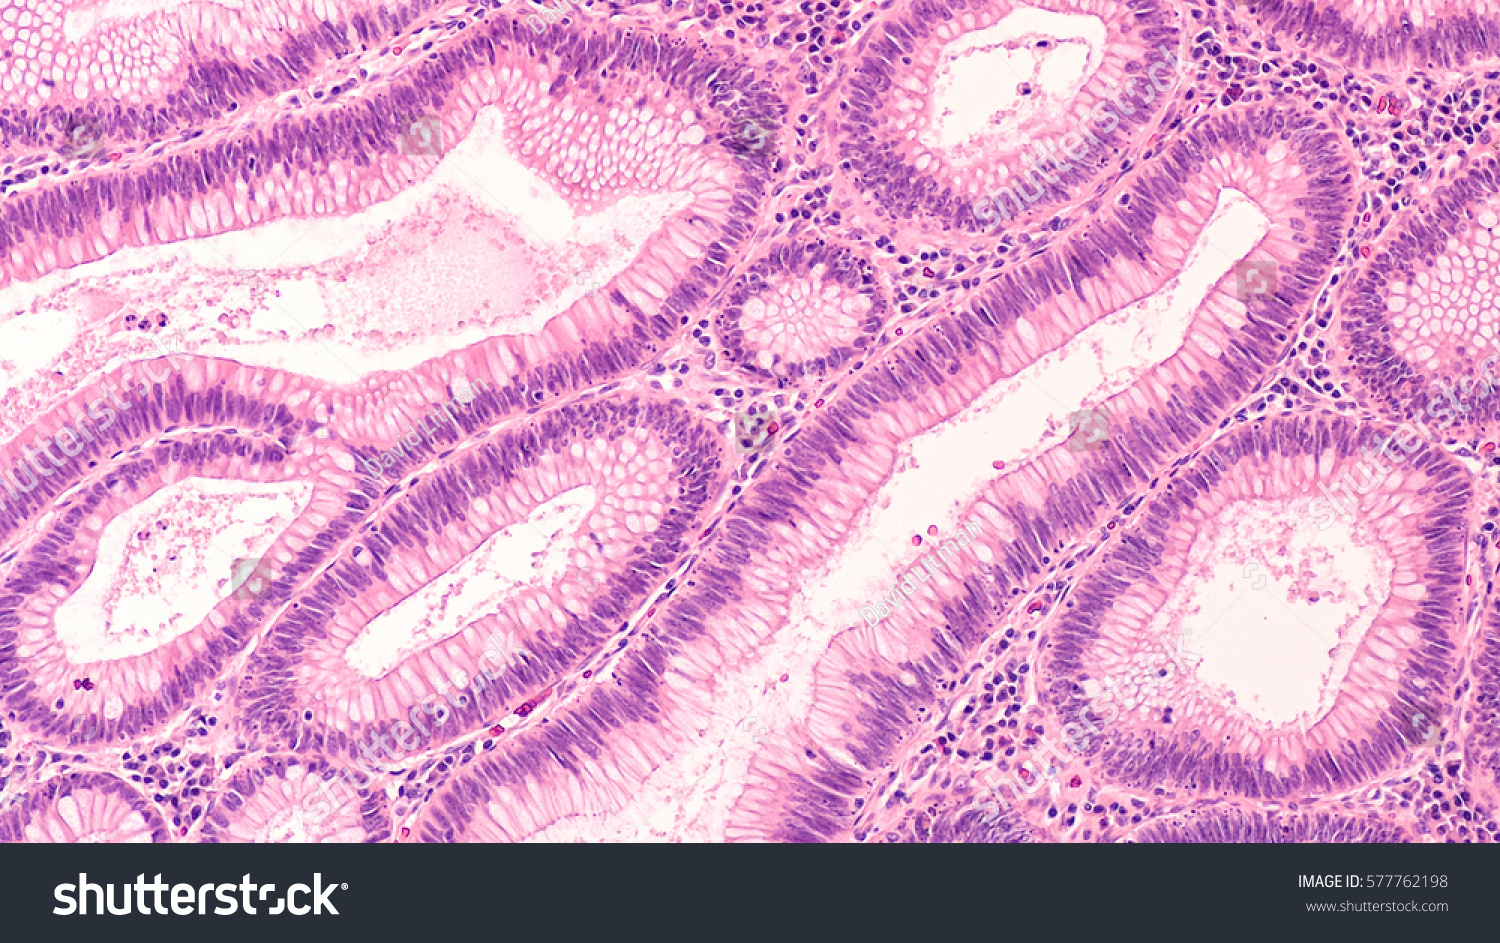 Microscopic (histology) of tubular adenoma. Adenomas are premalignant (precancerous) polyps of colon and rectum. Colonoscopy can prevent cancer by removing adenomas before they transform to cancer. #577762198